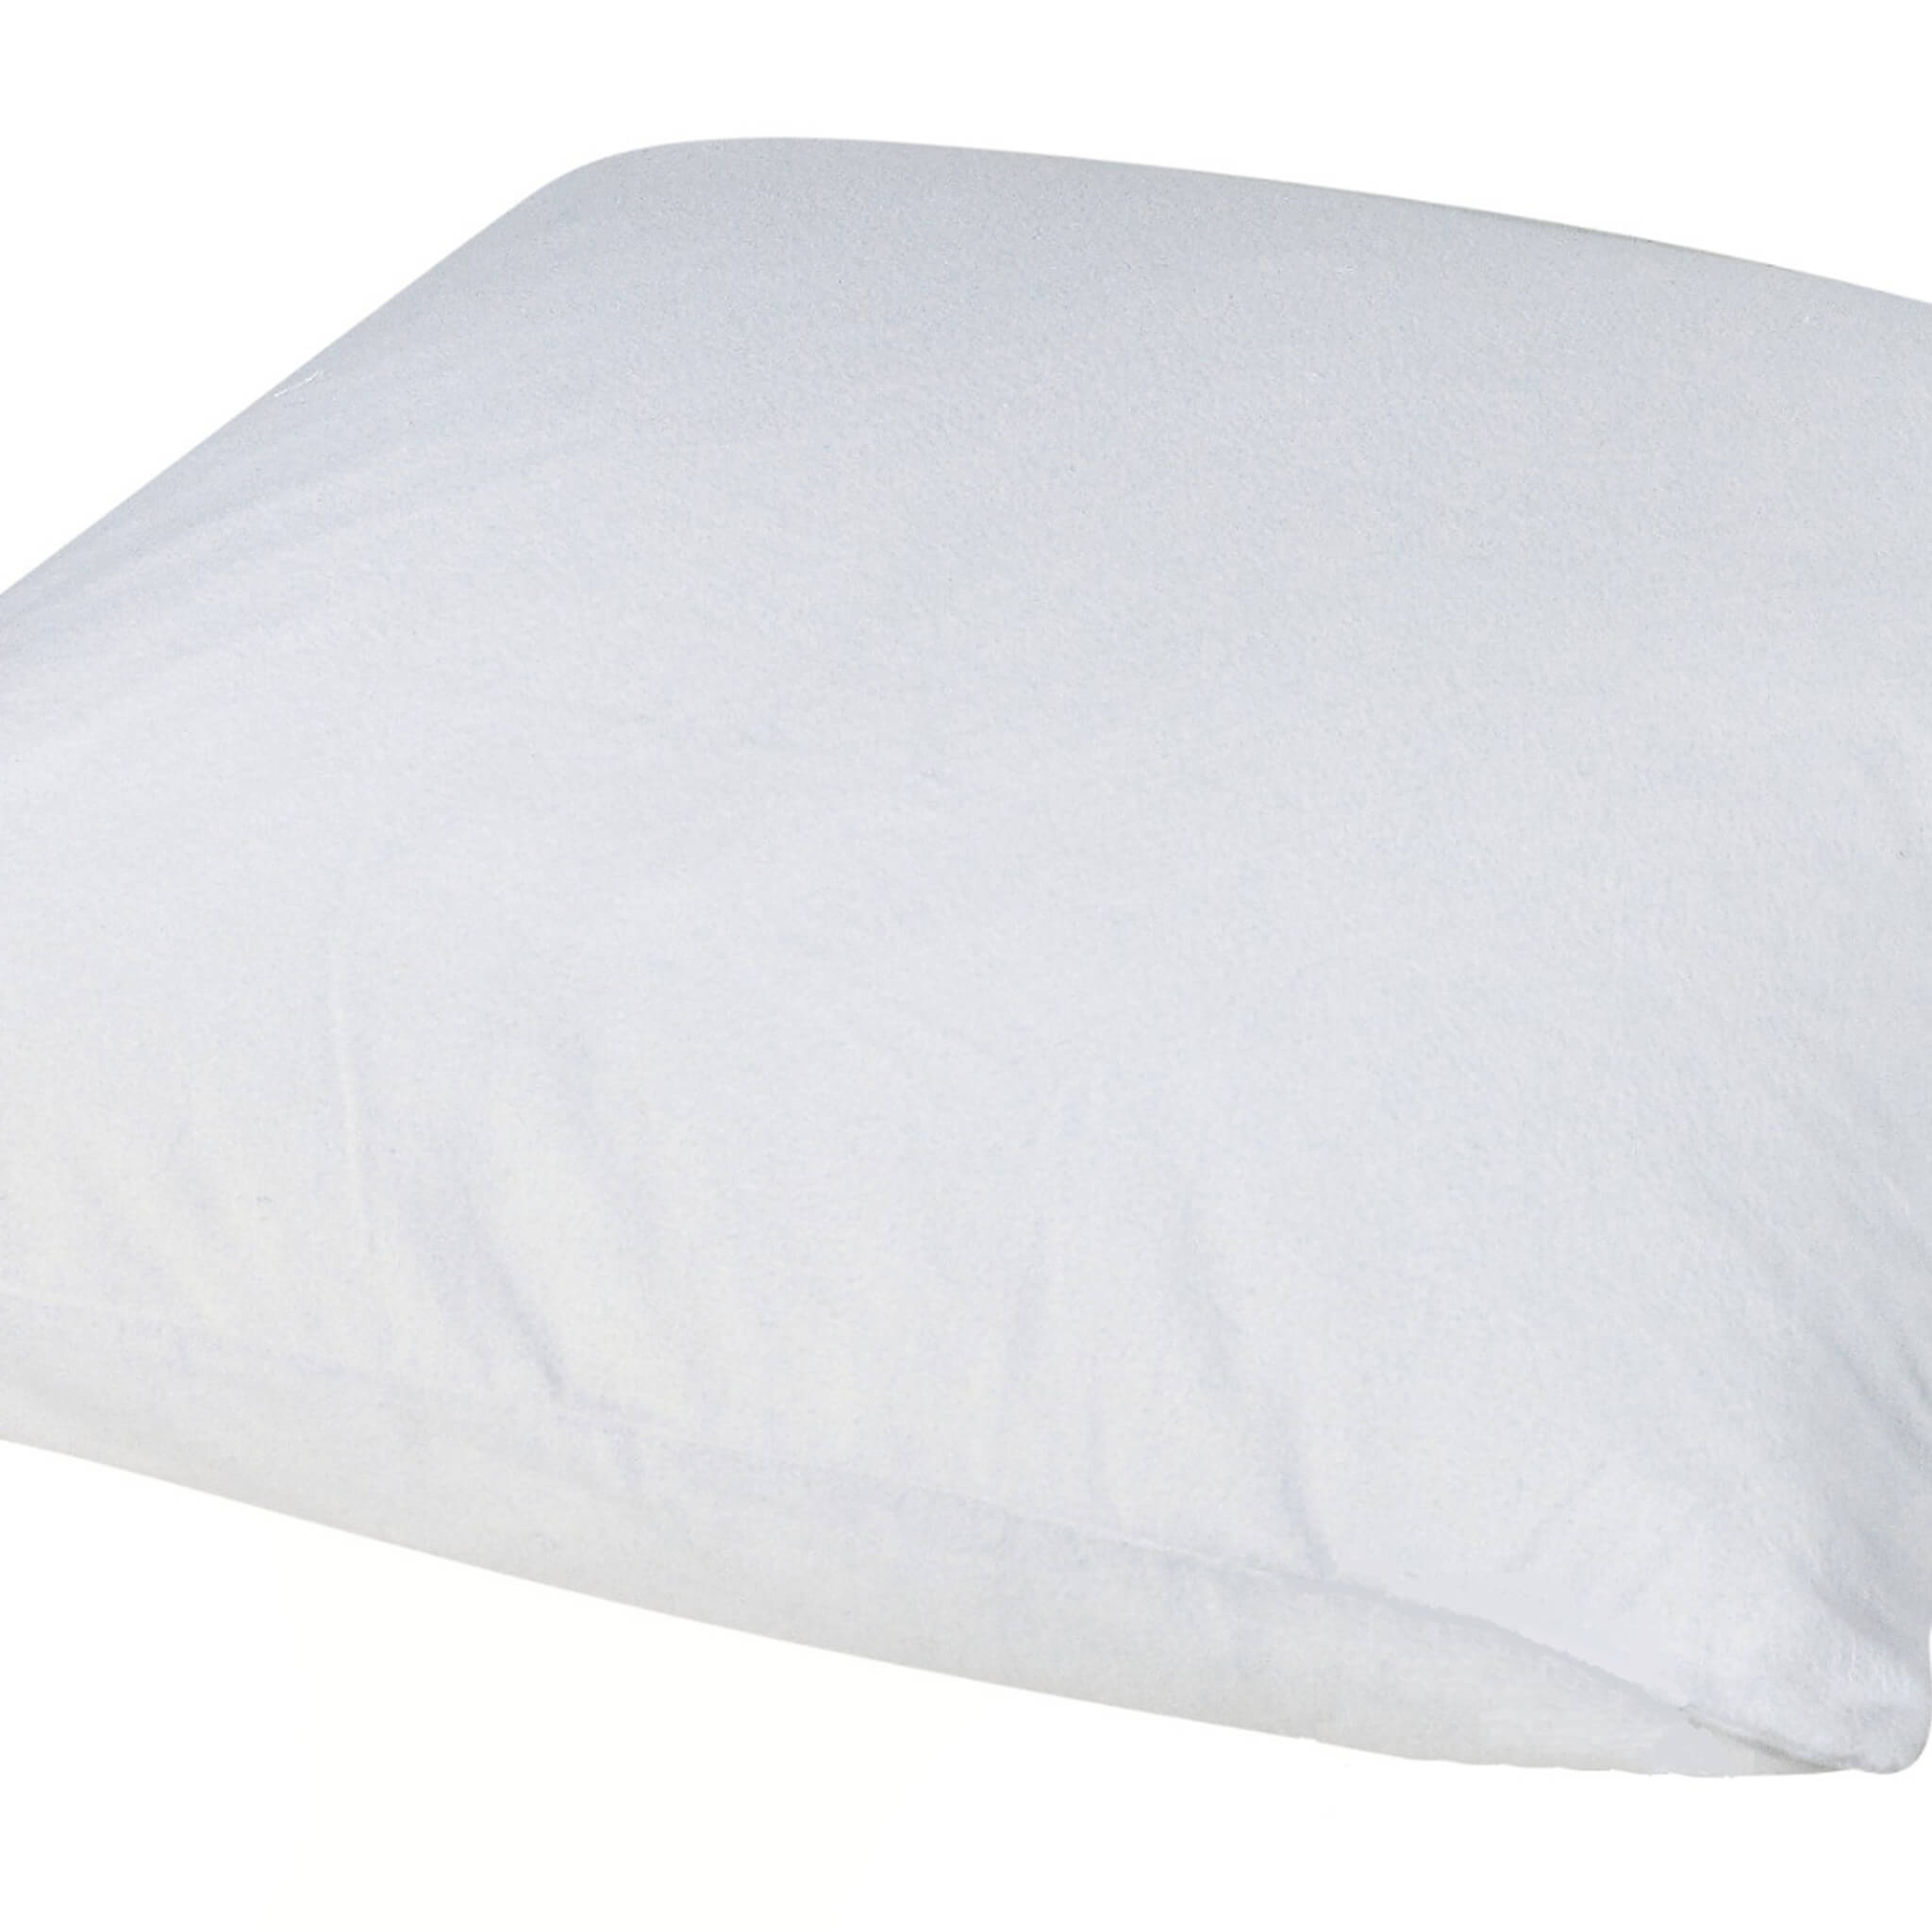 Protège oreiller à rabat blanc